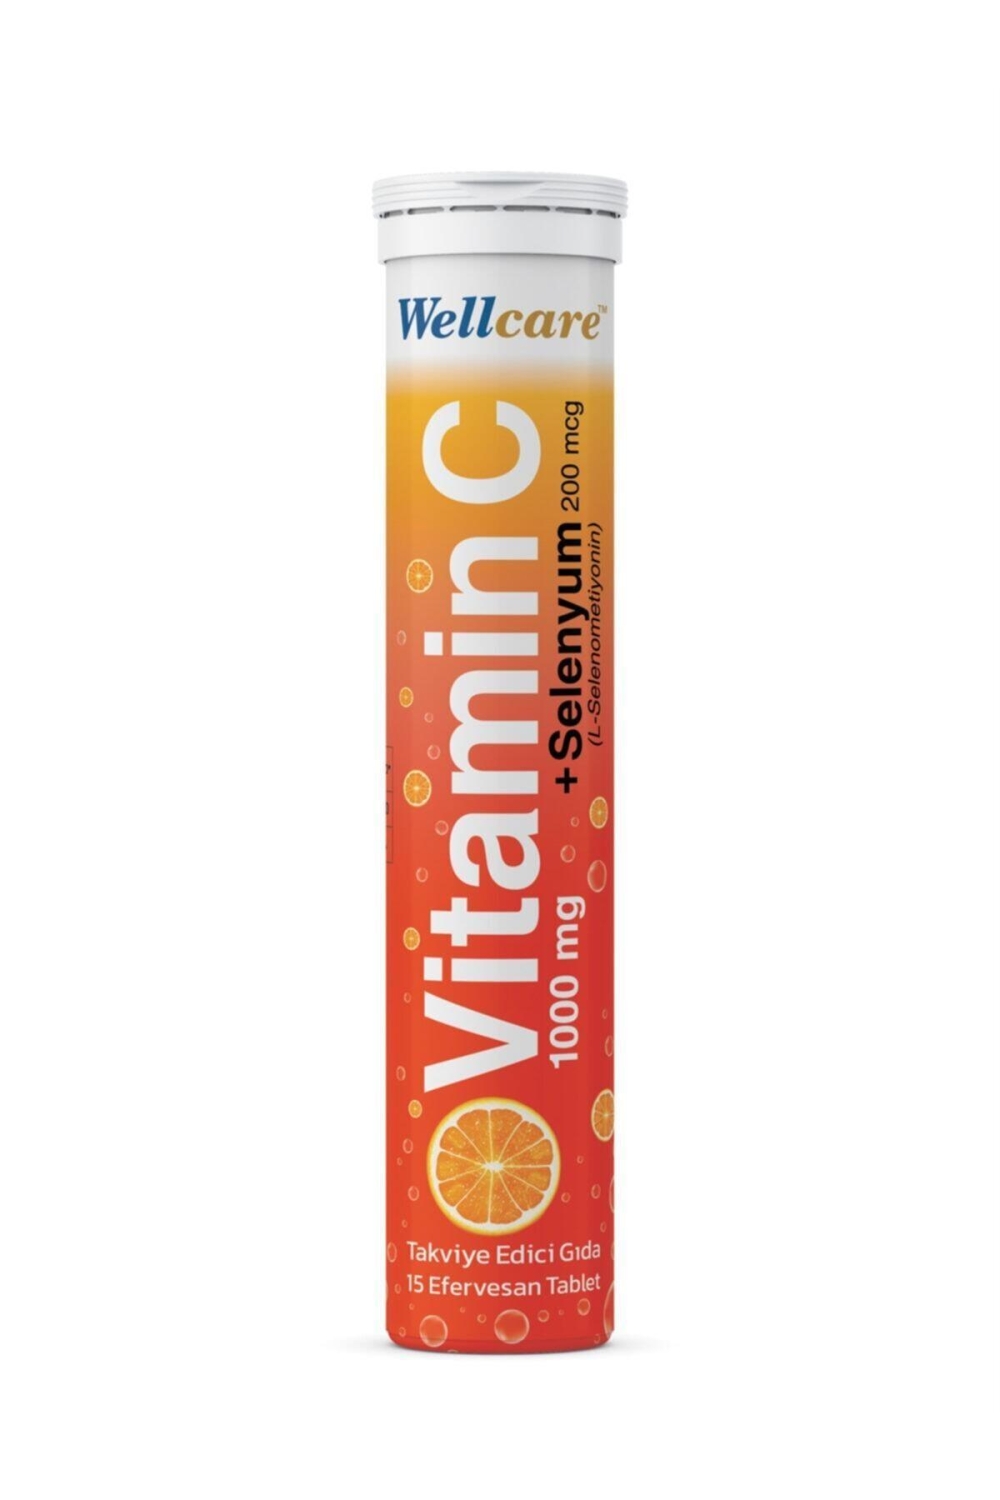 Wellcare Vitamin C 1000 mg + Selenyum 15 Efervesan - 1